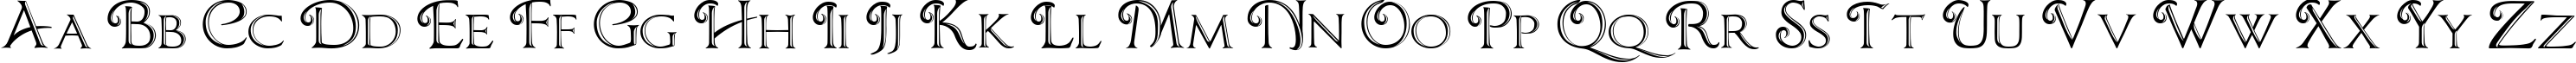 Пример написания английского алфавита шрифтом ChocolateBoxDecorative